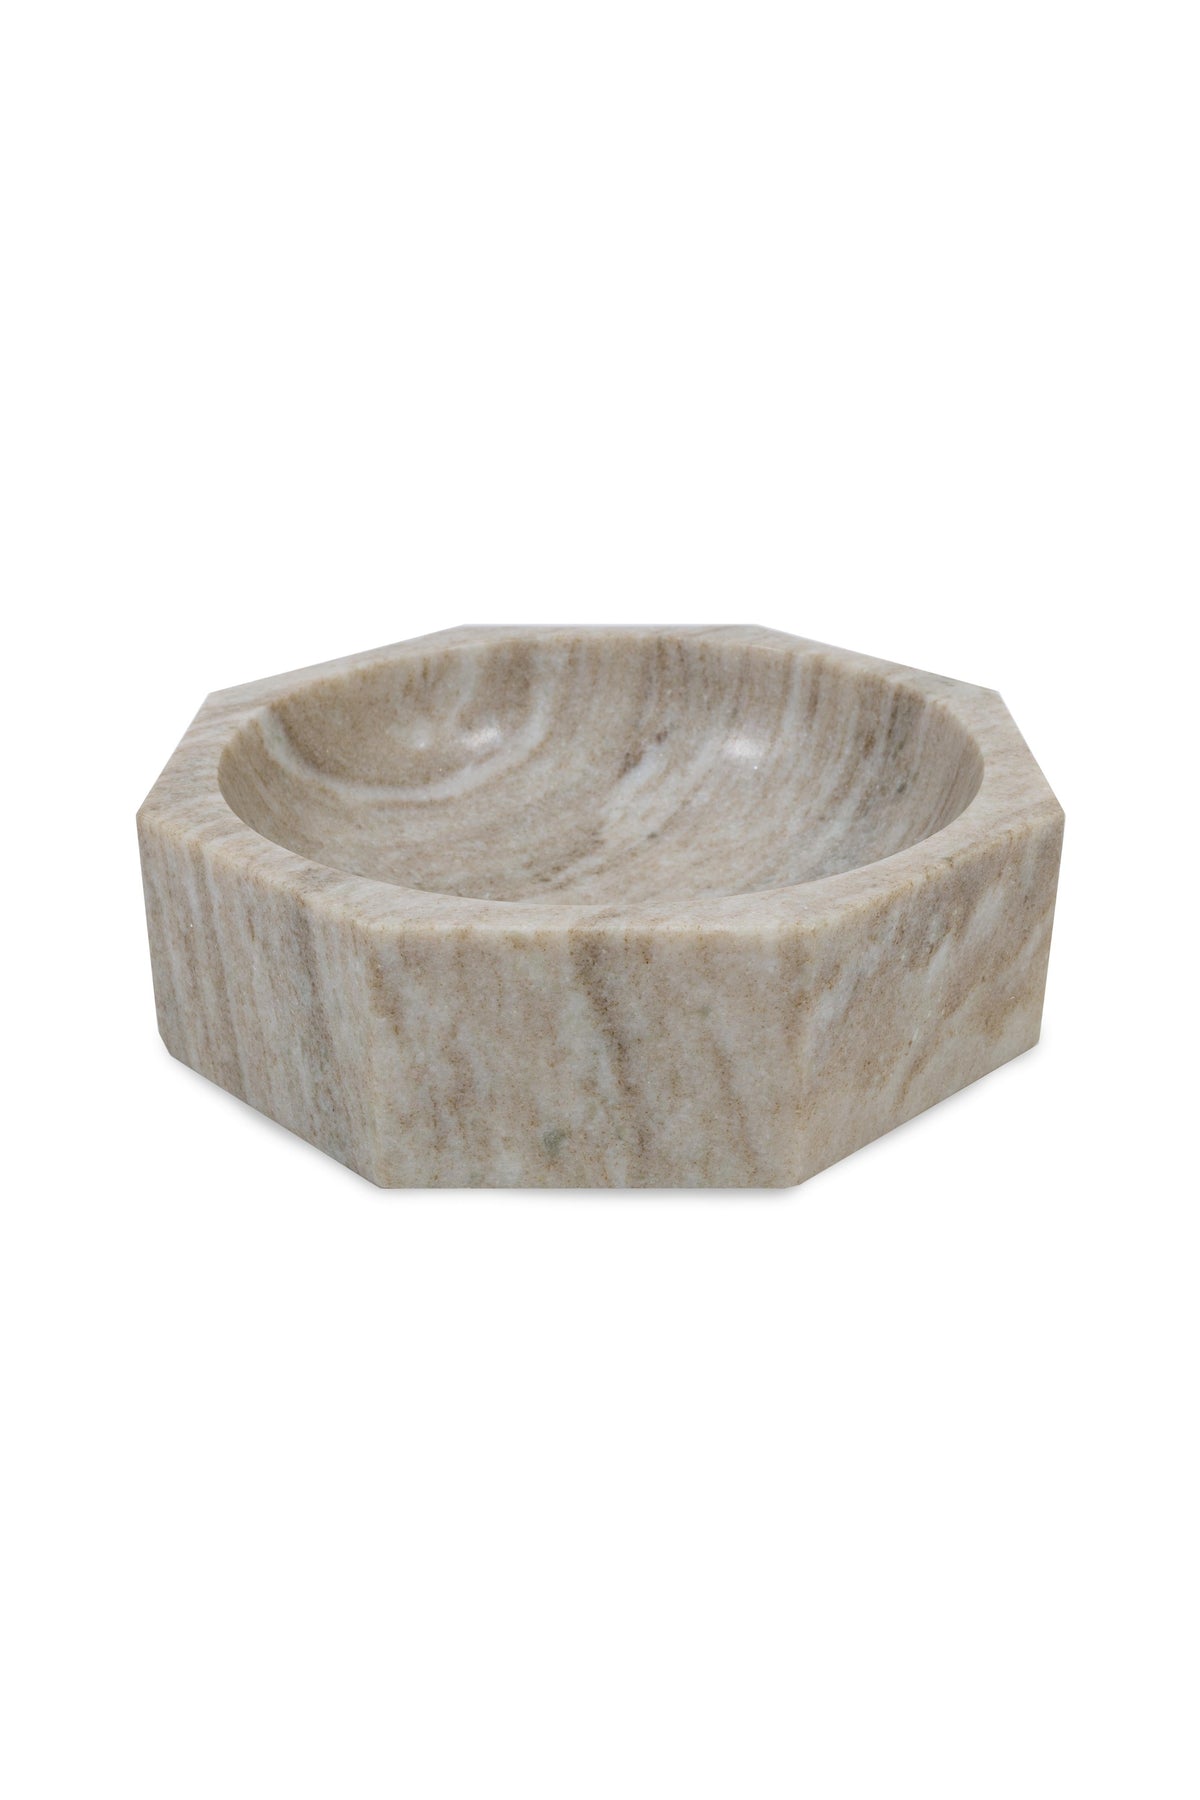 Octagonal Marble Bowl in Beige Marble | Undisclosed